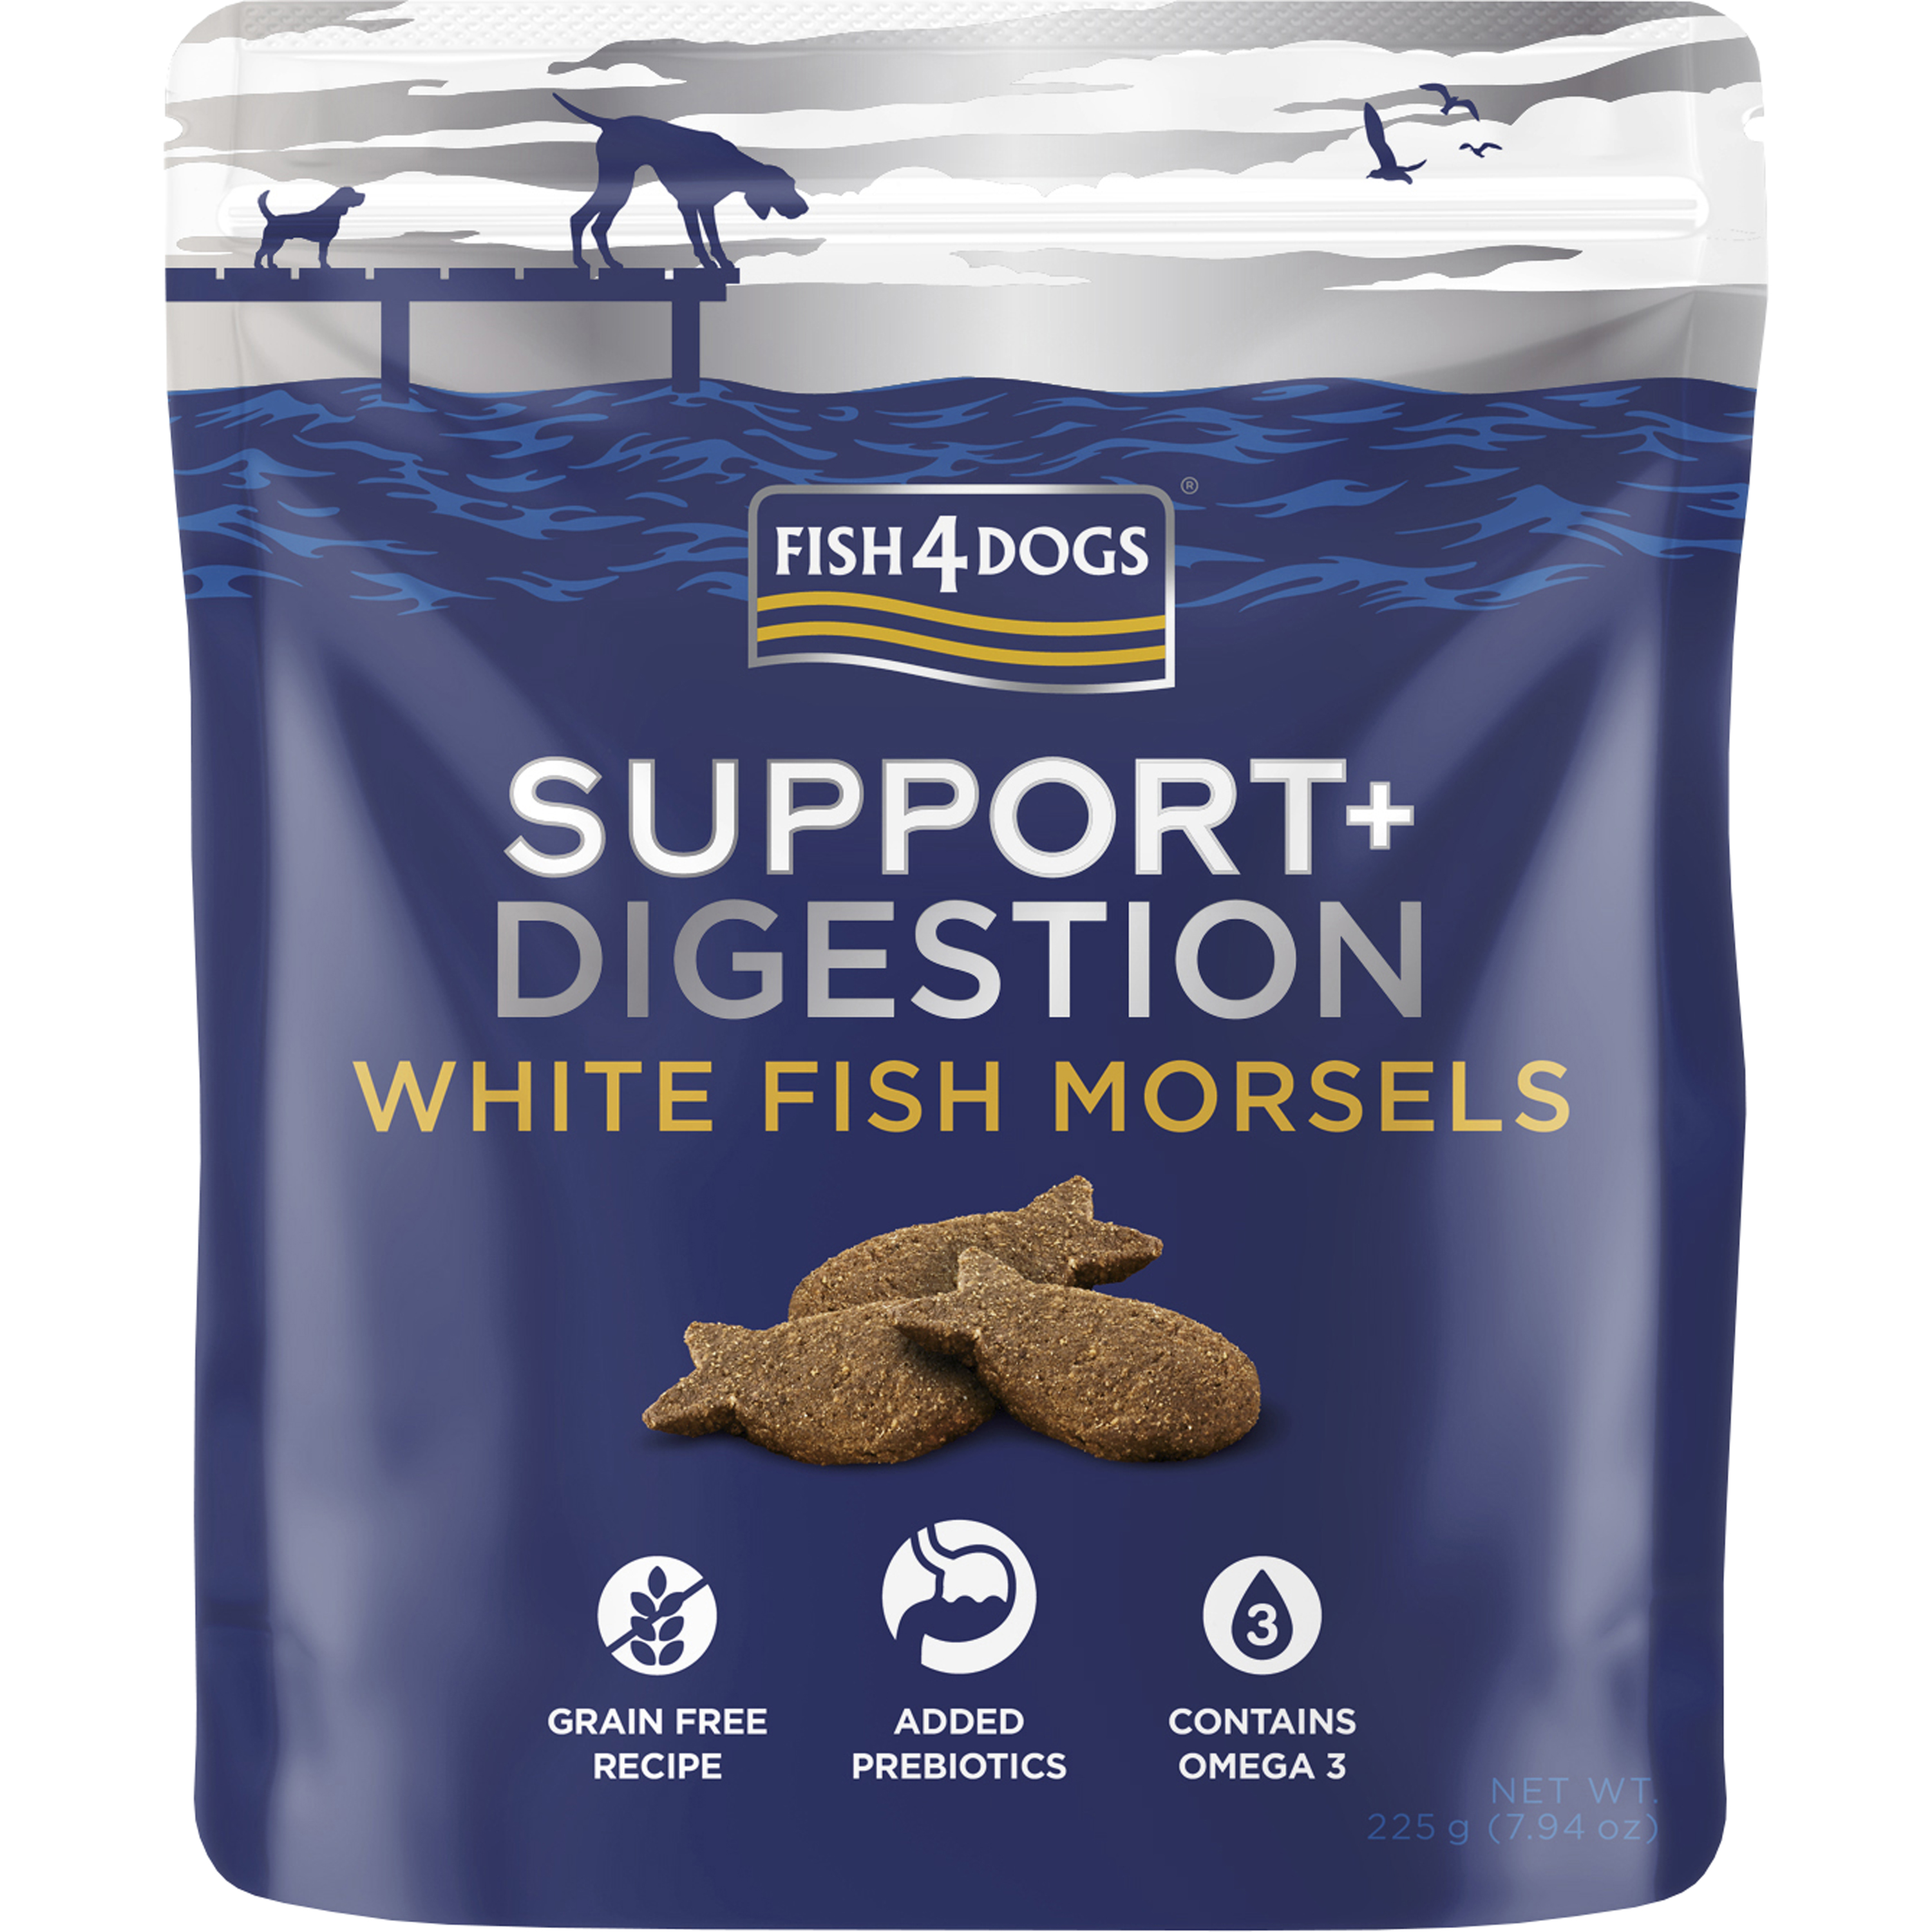 Hundgodis Fish4Dogs Support+ Digestion 225 g